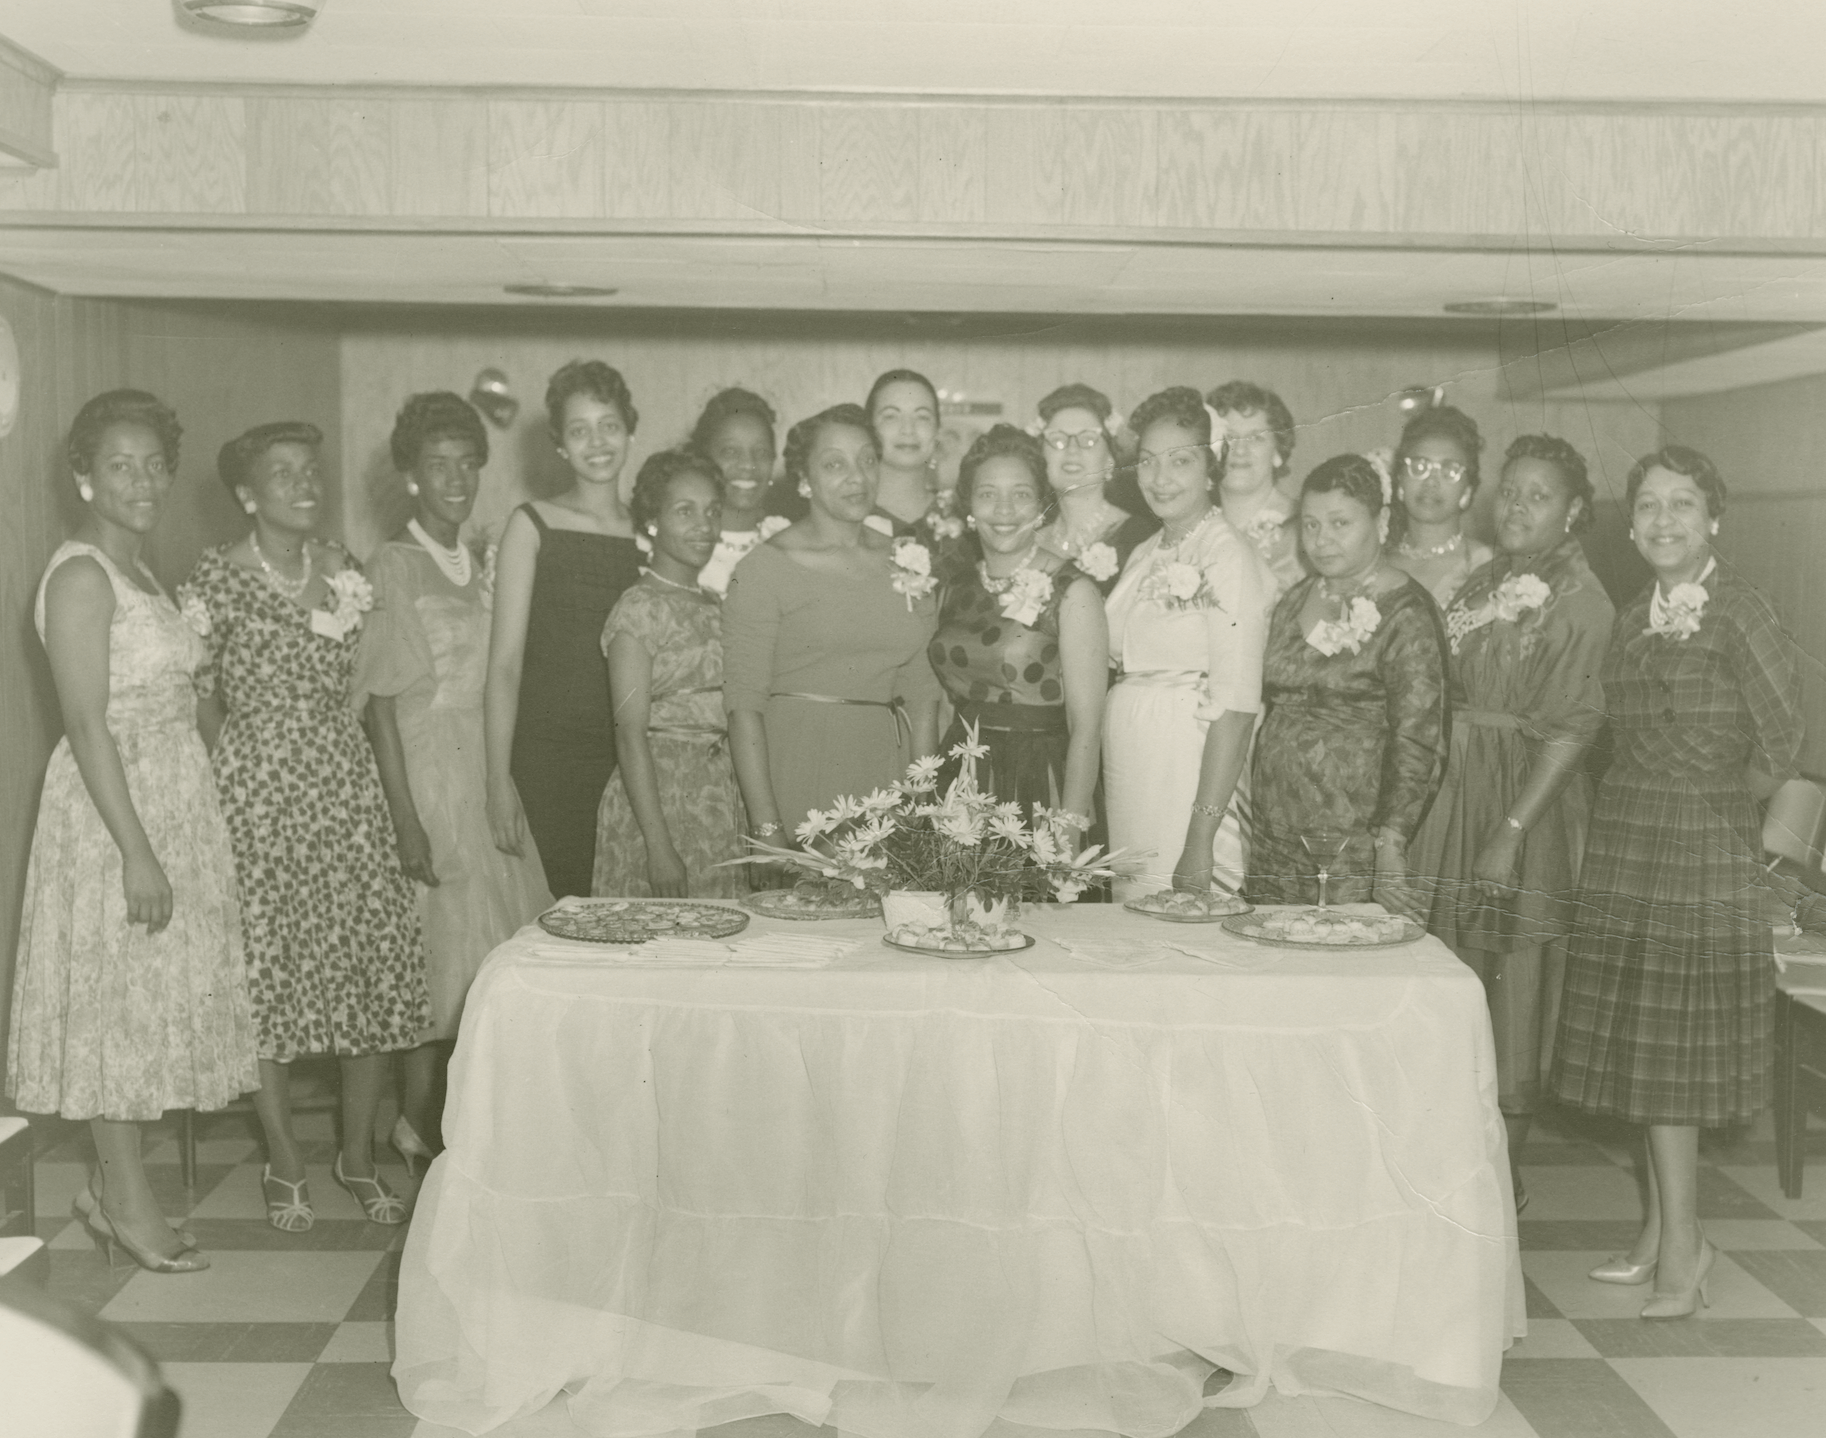 TULC Women's Committee, circa 1960s